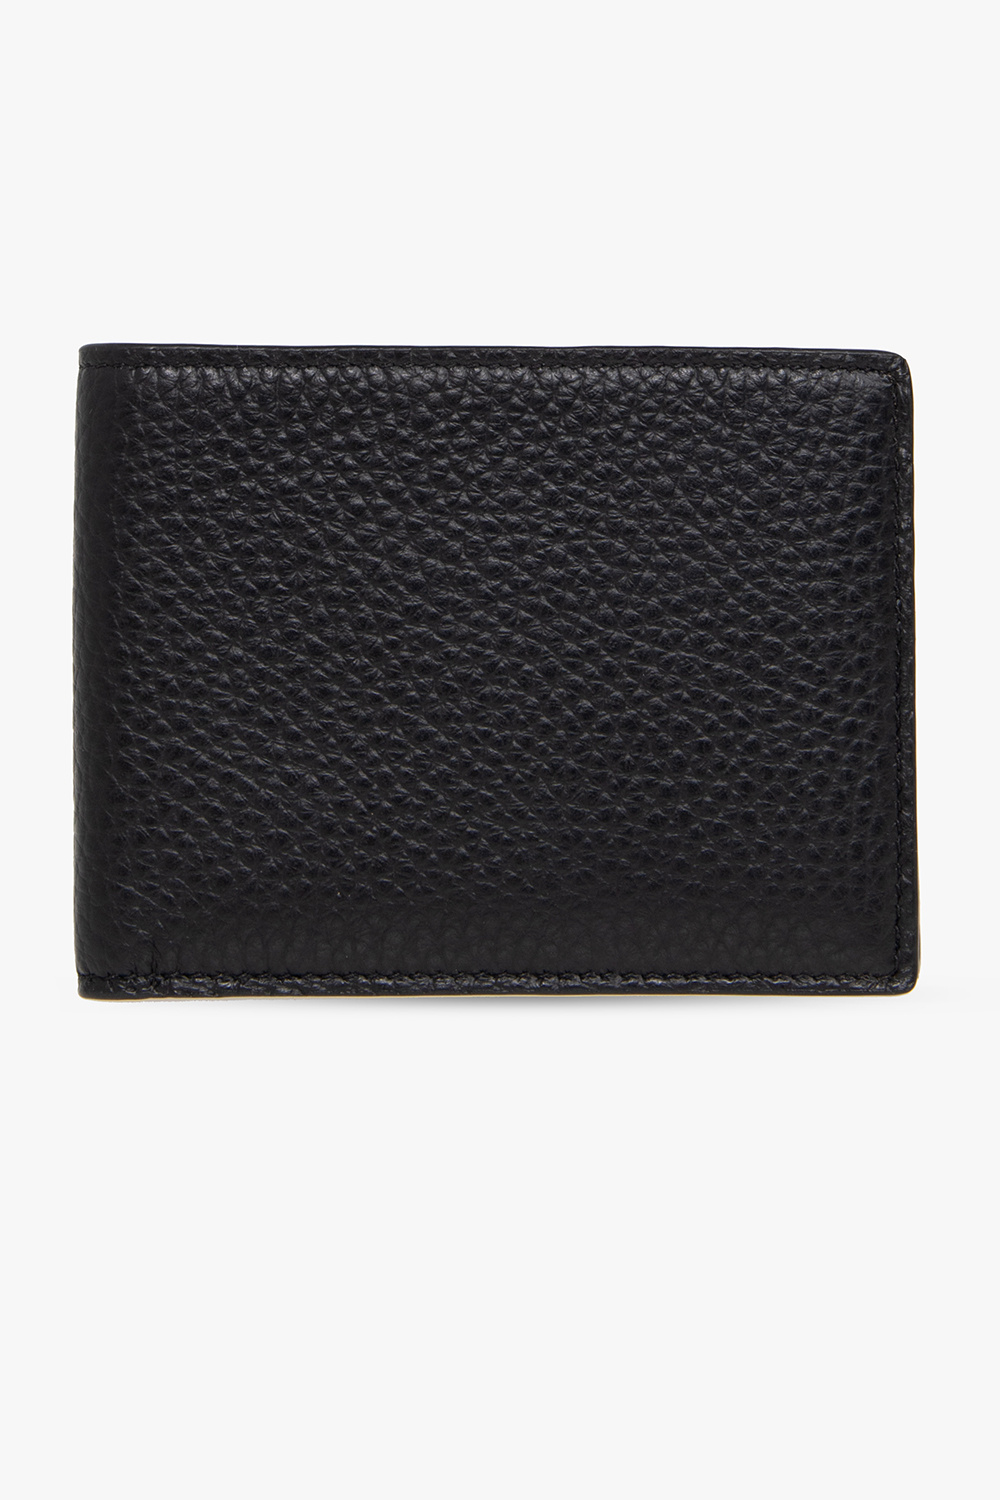 Salvatore Ferragamo Men's Black Logo Decorated 100% Leather Bifold Wallet